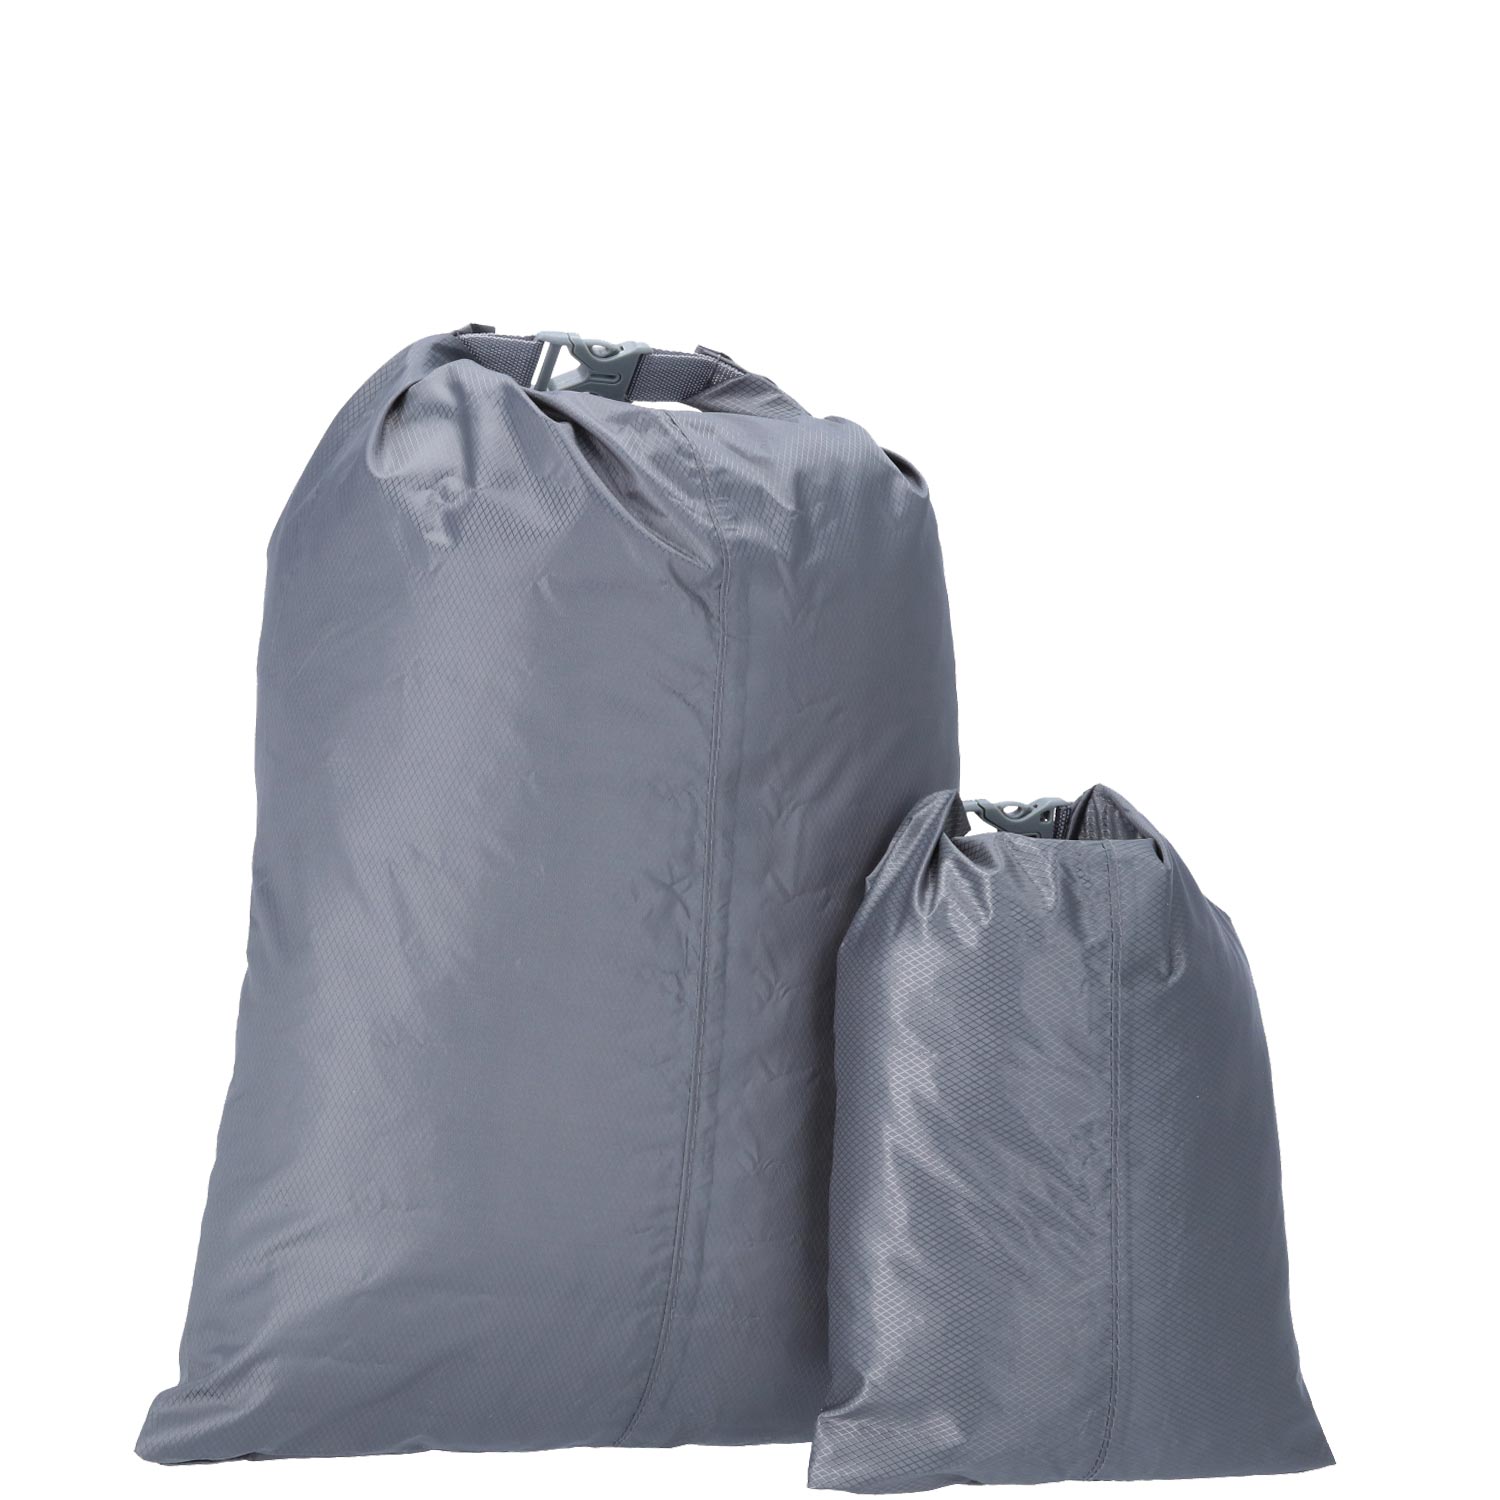 TheTrueC Waterproof Dry Bag grau